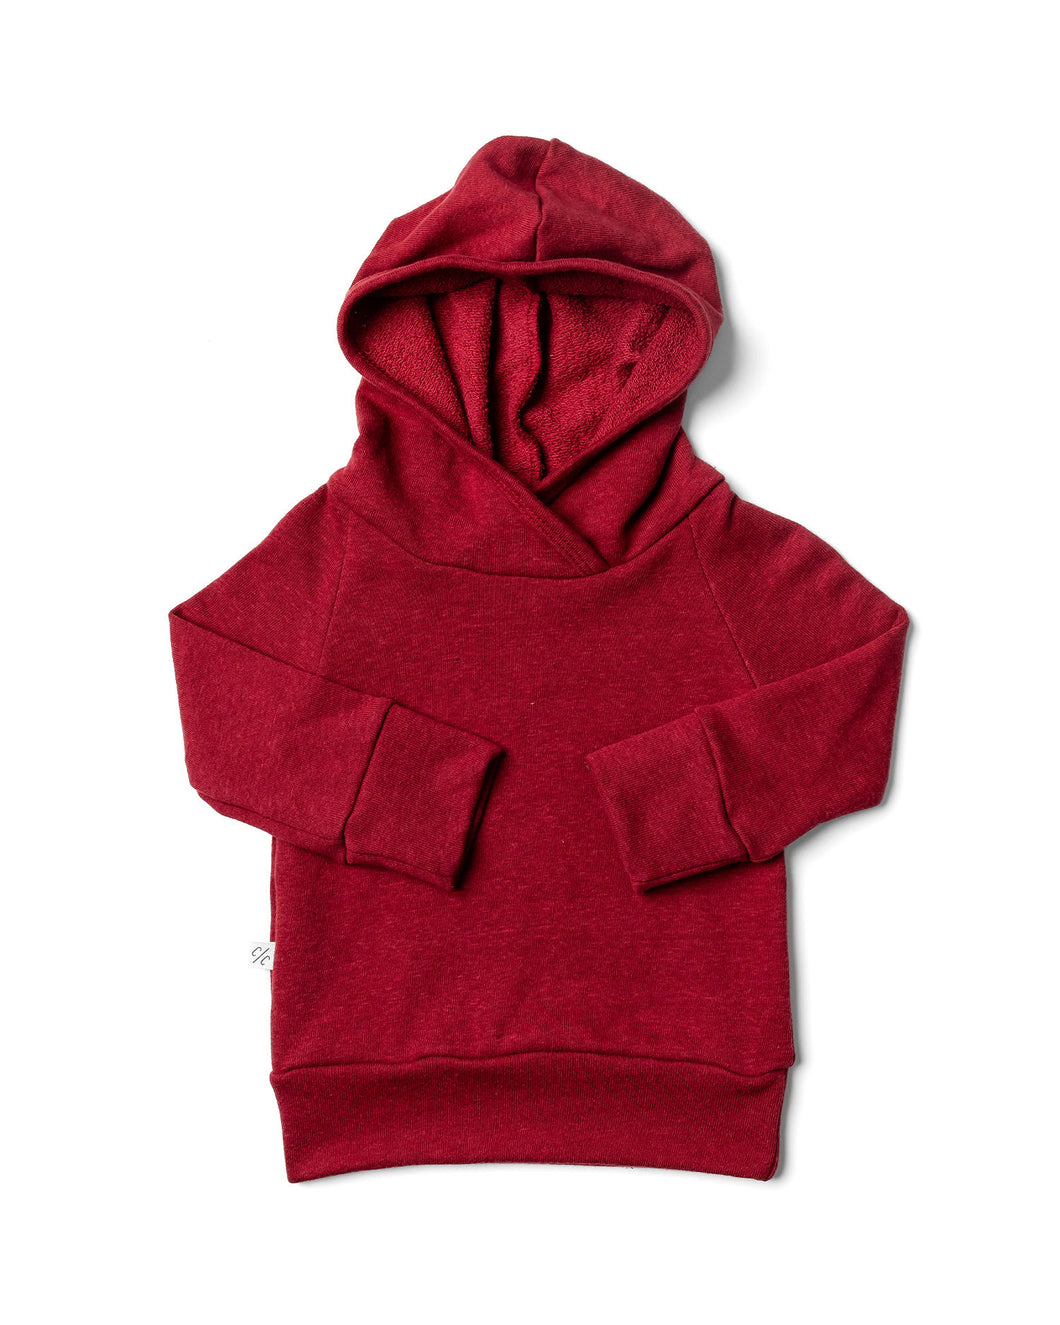 trademark raglan hoodie - candy apple